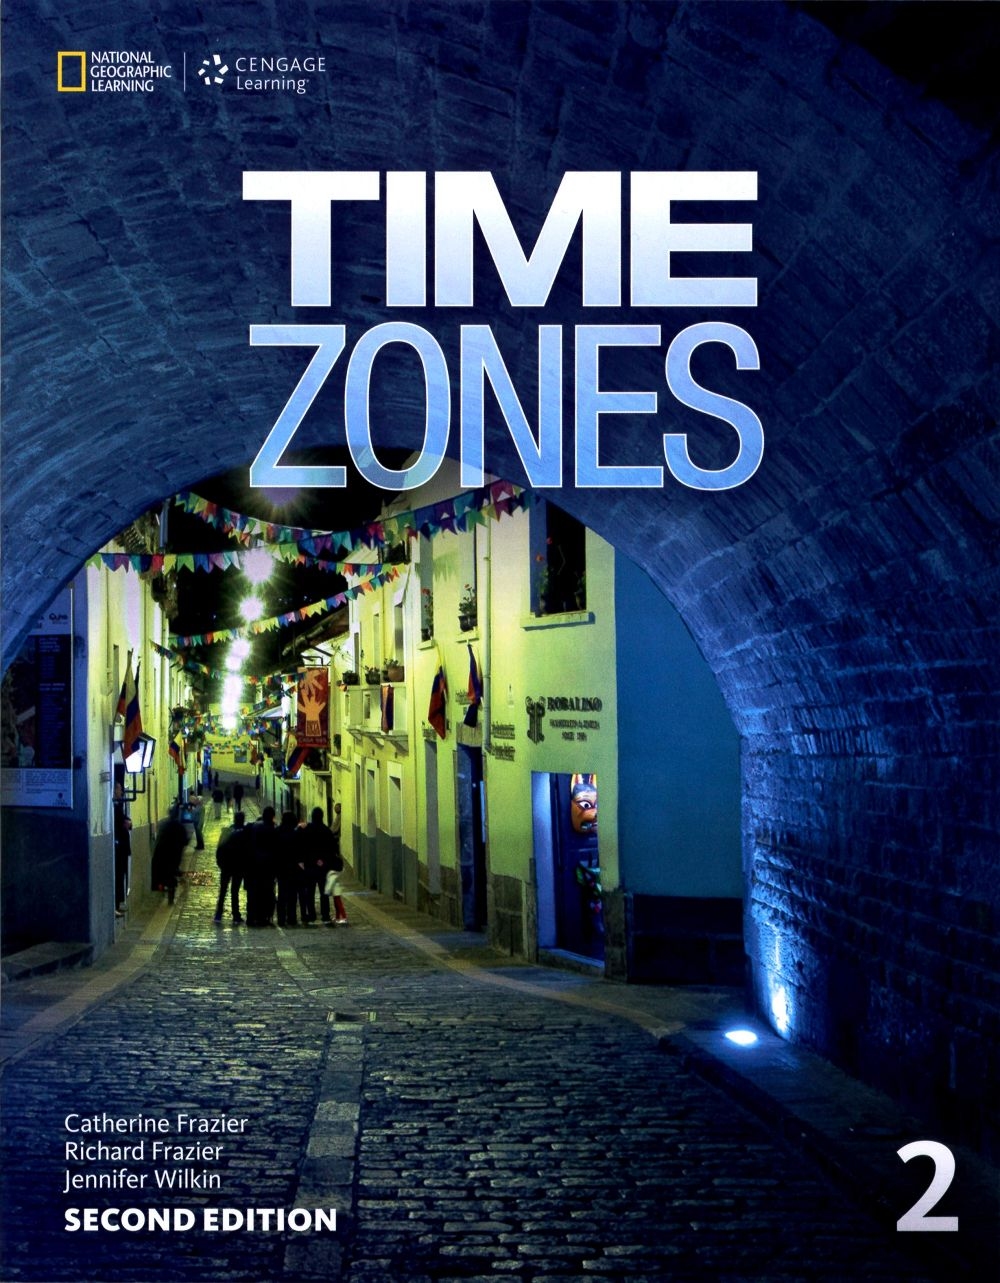 Time Zones 2/e (2) Student Book